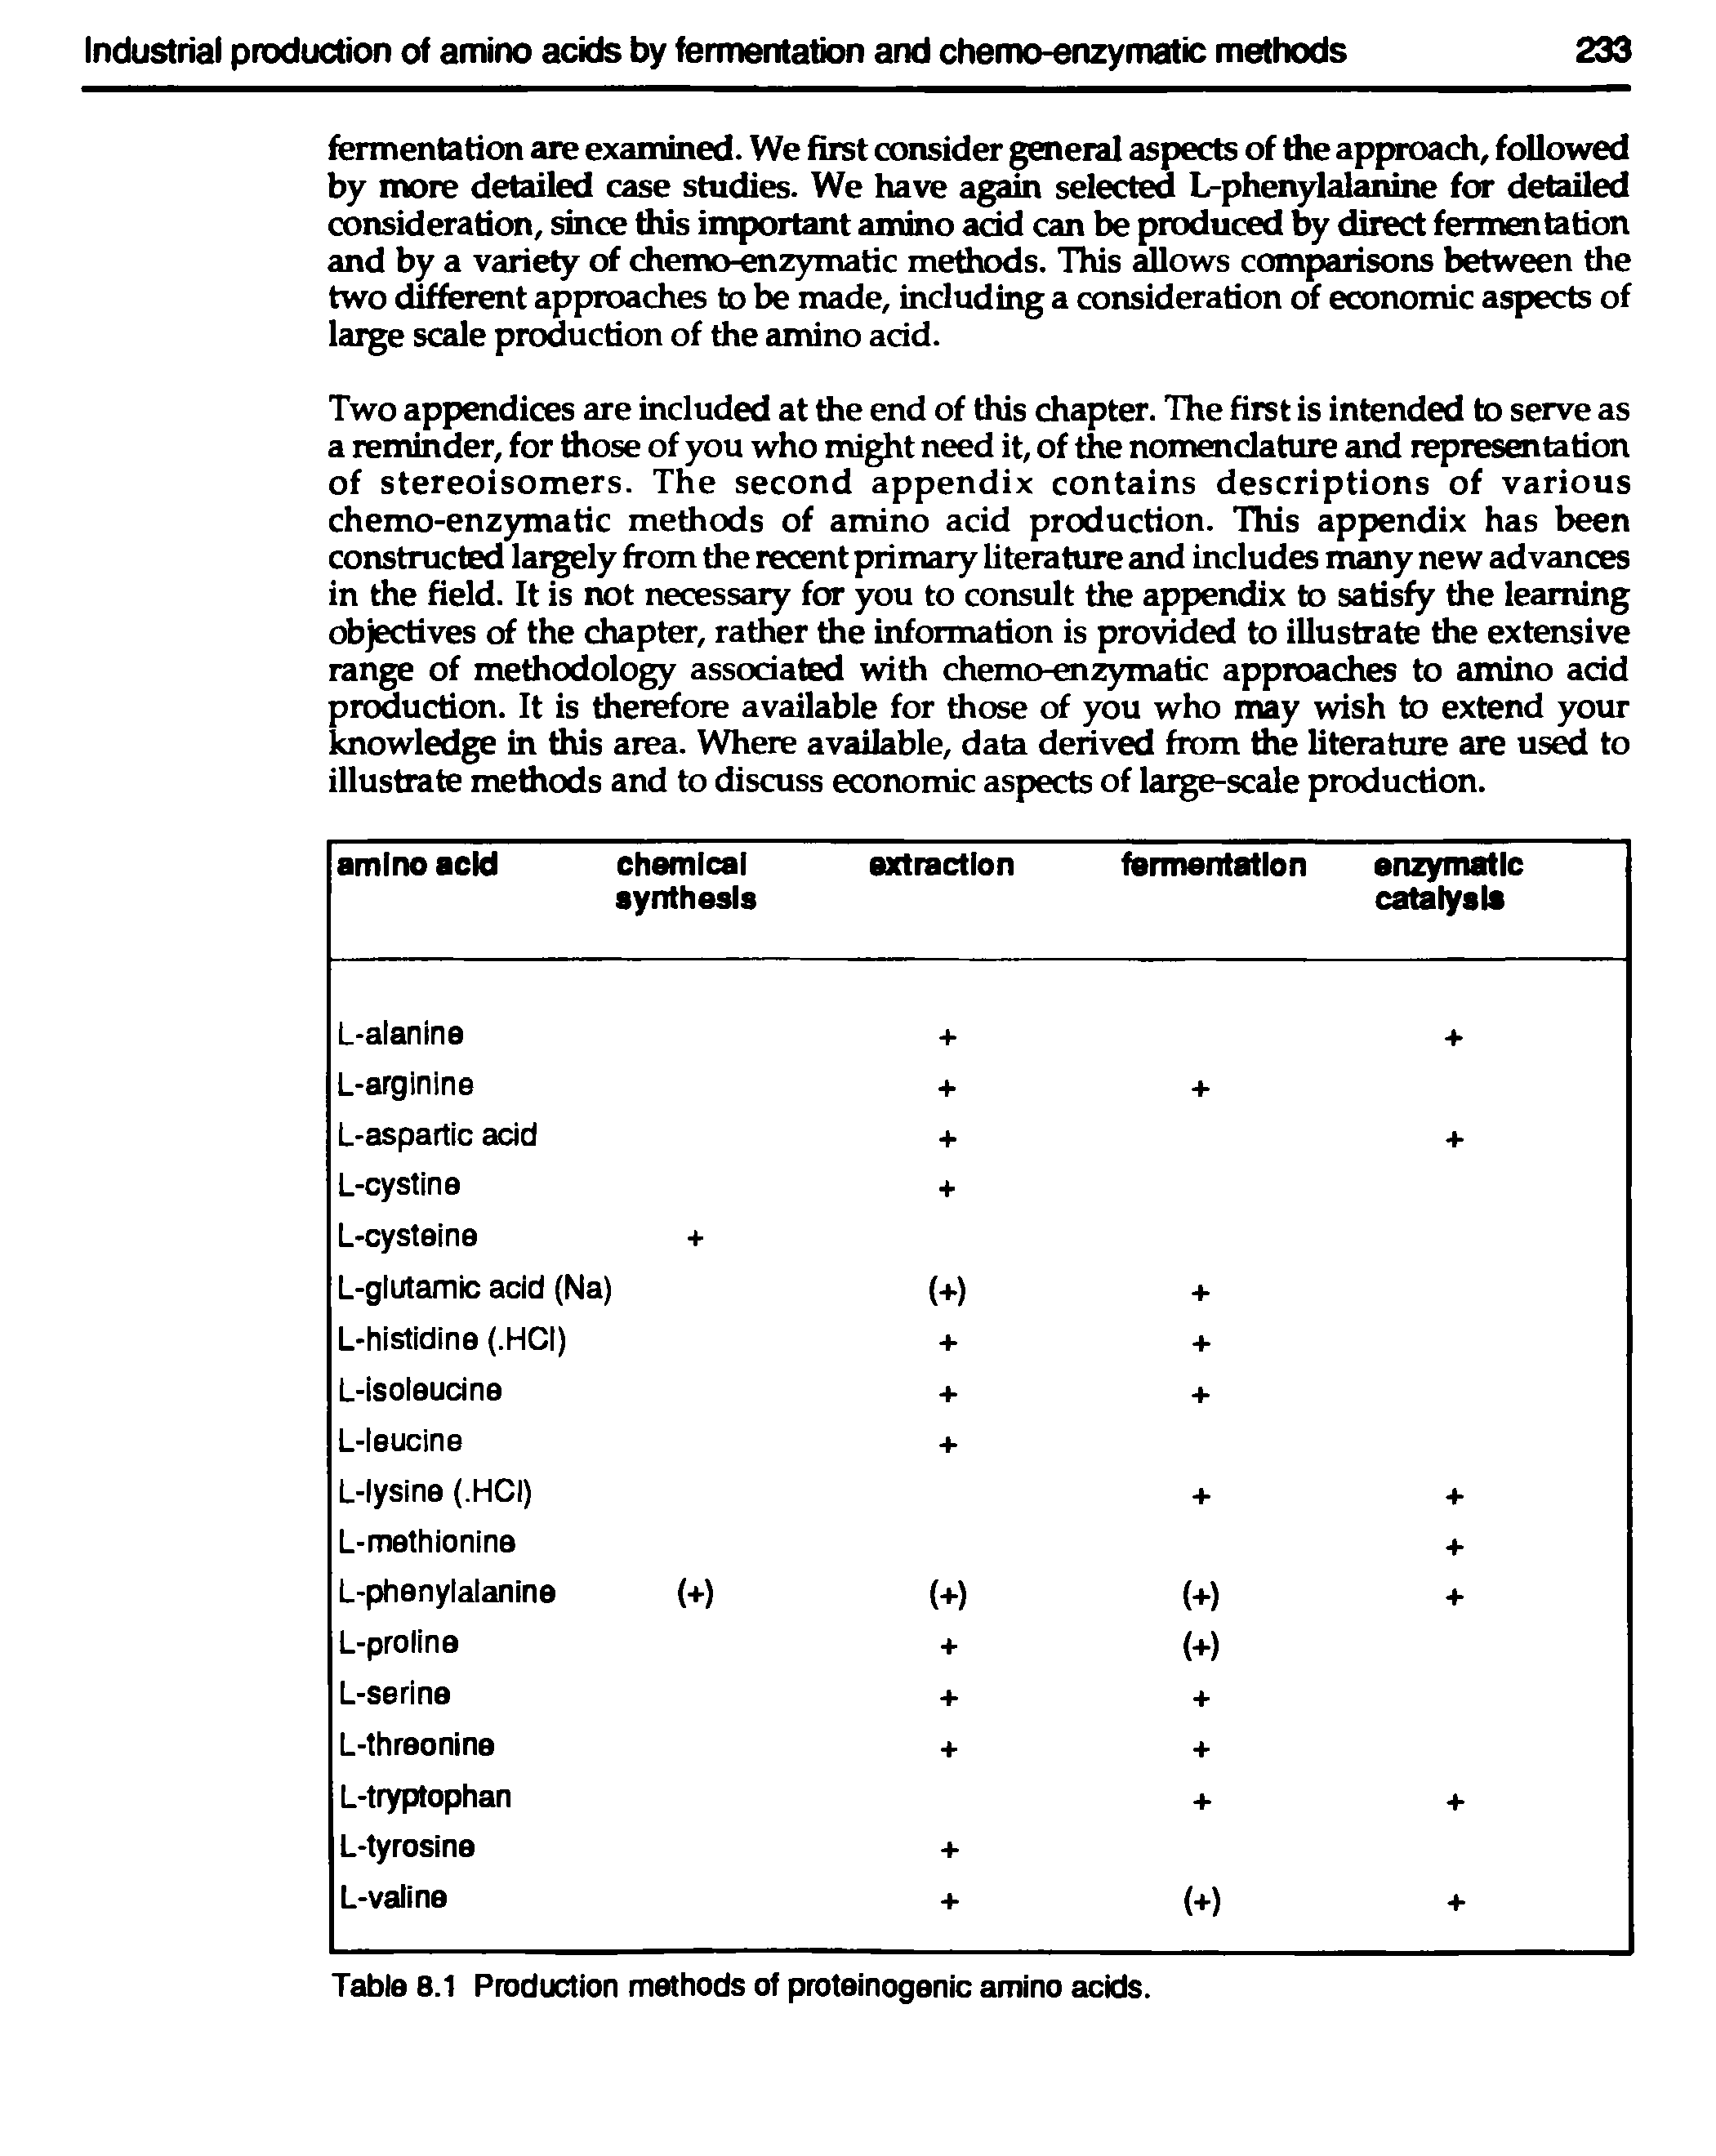 Table 8.1 Production methods of proteinogenic amino acids.